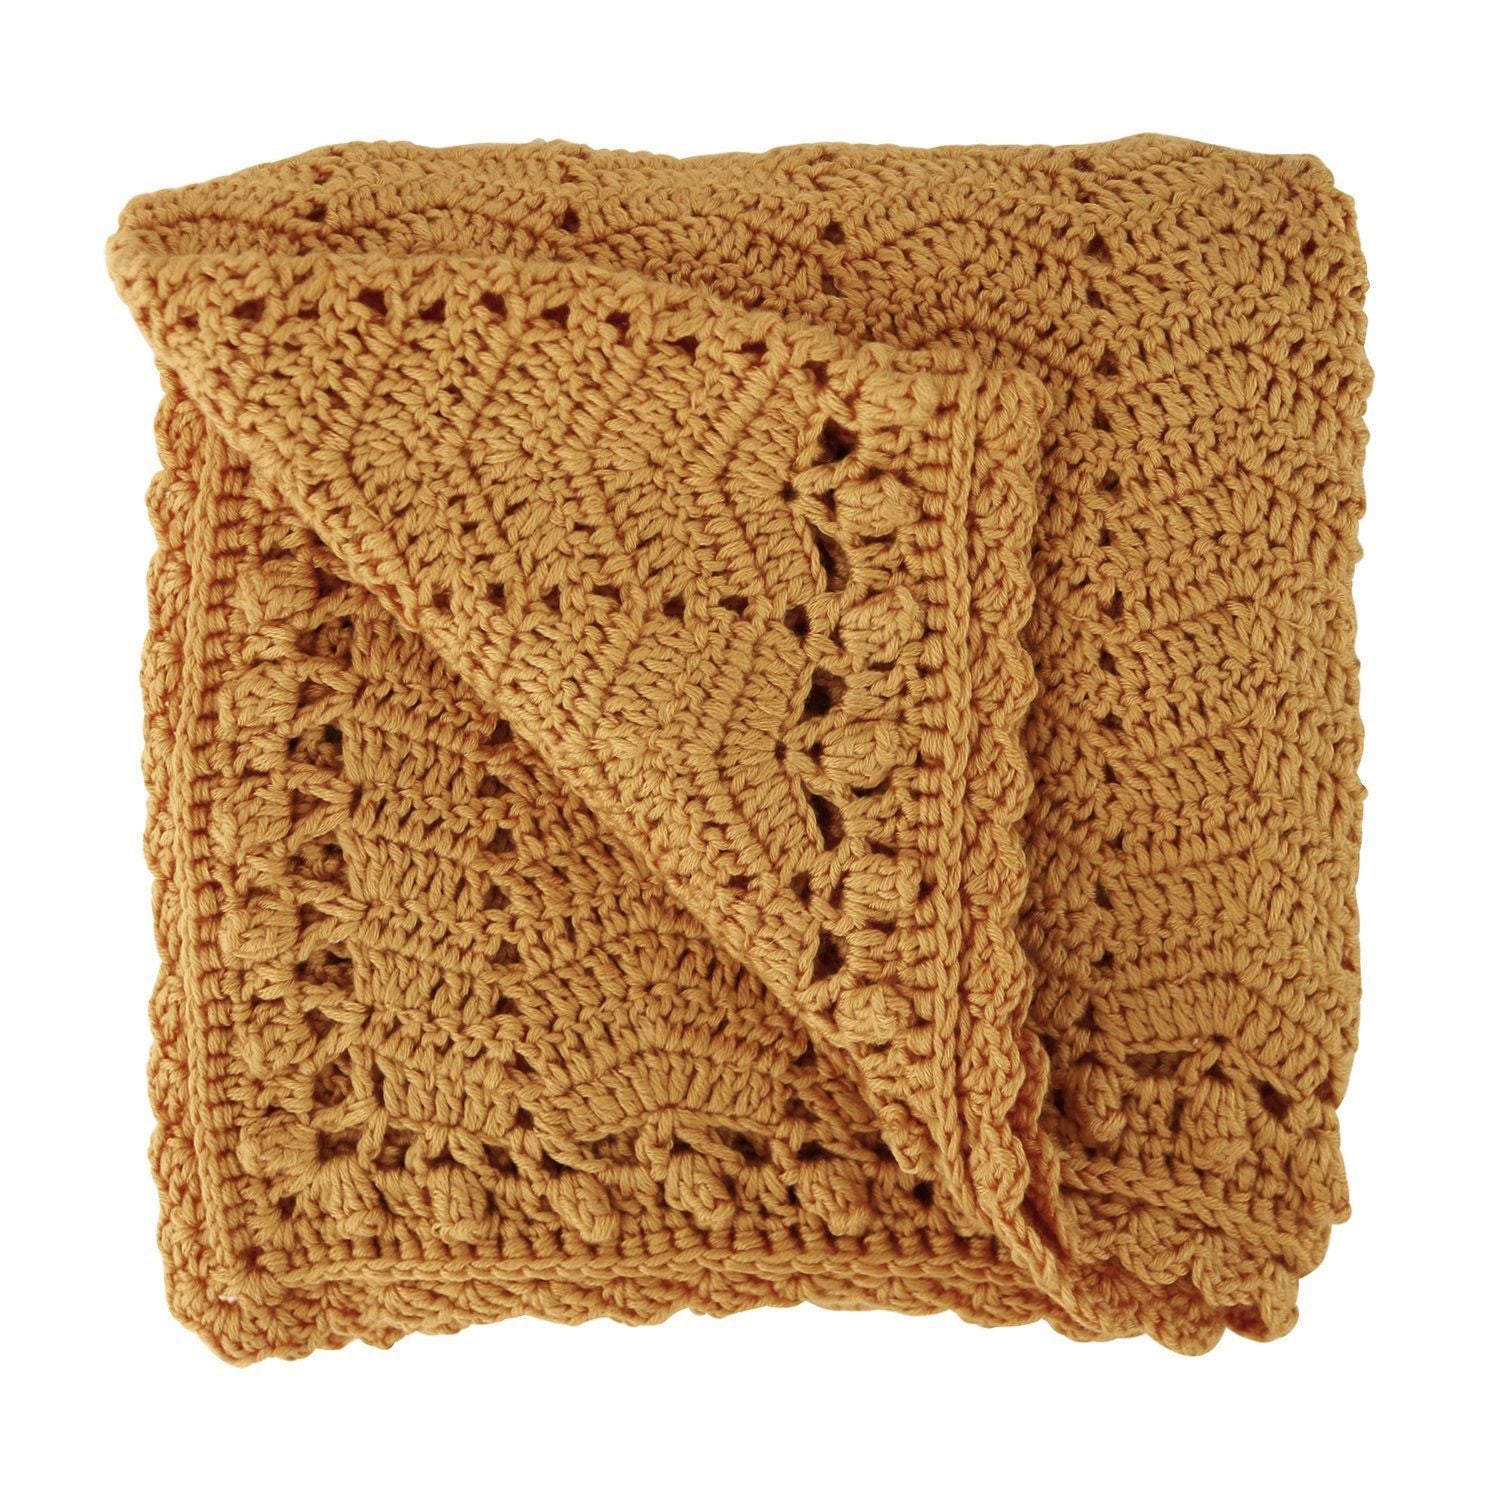 OB Designs Crochet Baby Blanket - Cinnamon